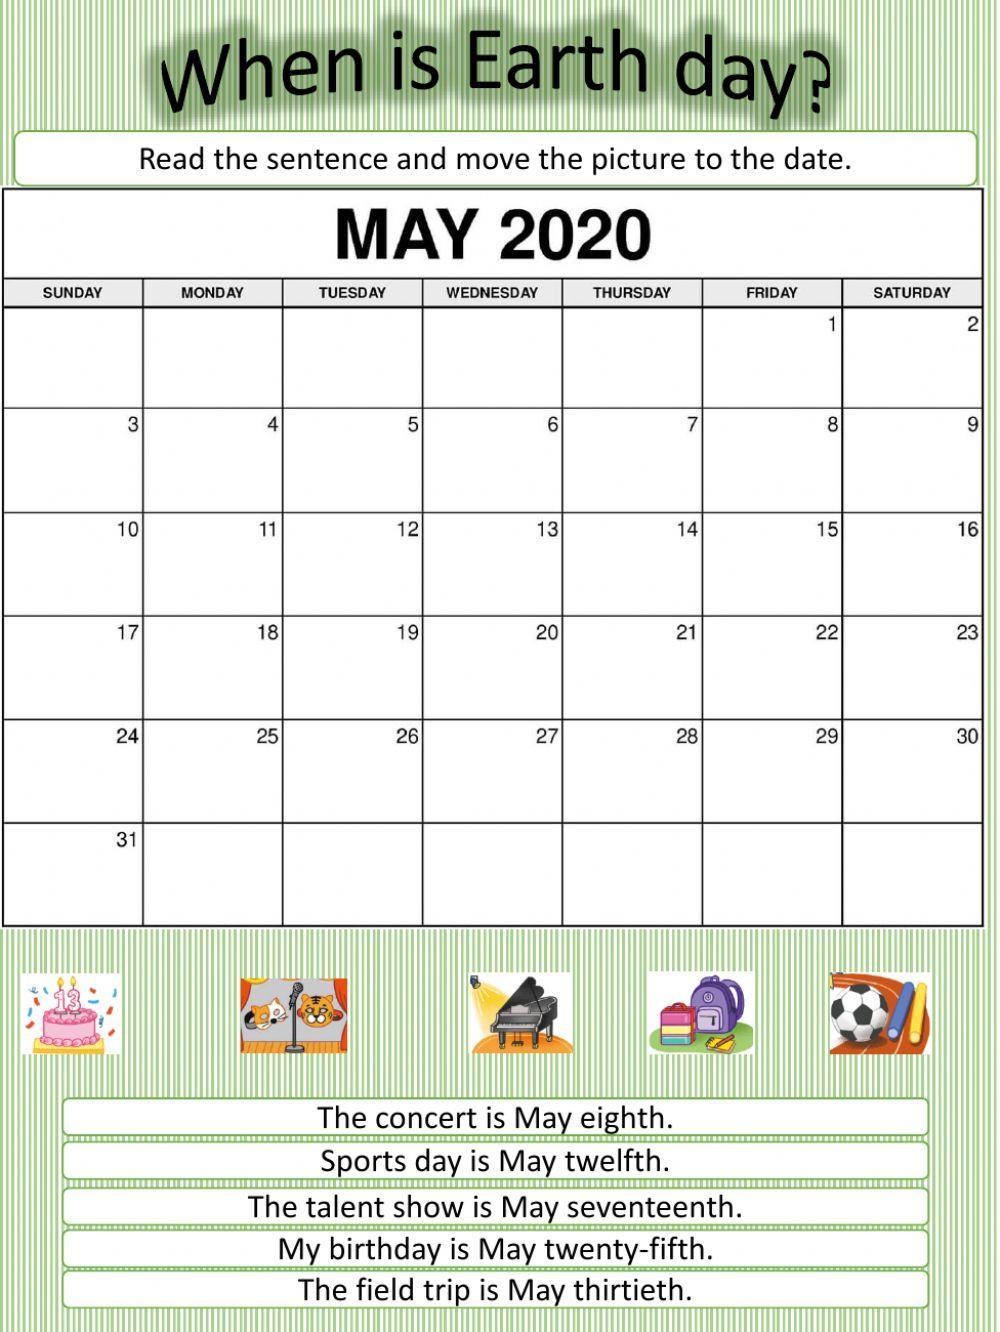 When is Earth Day? Calendar